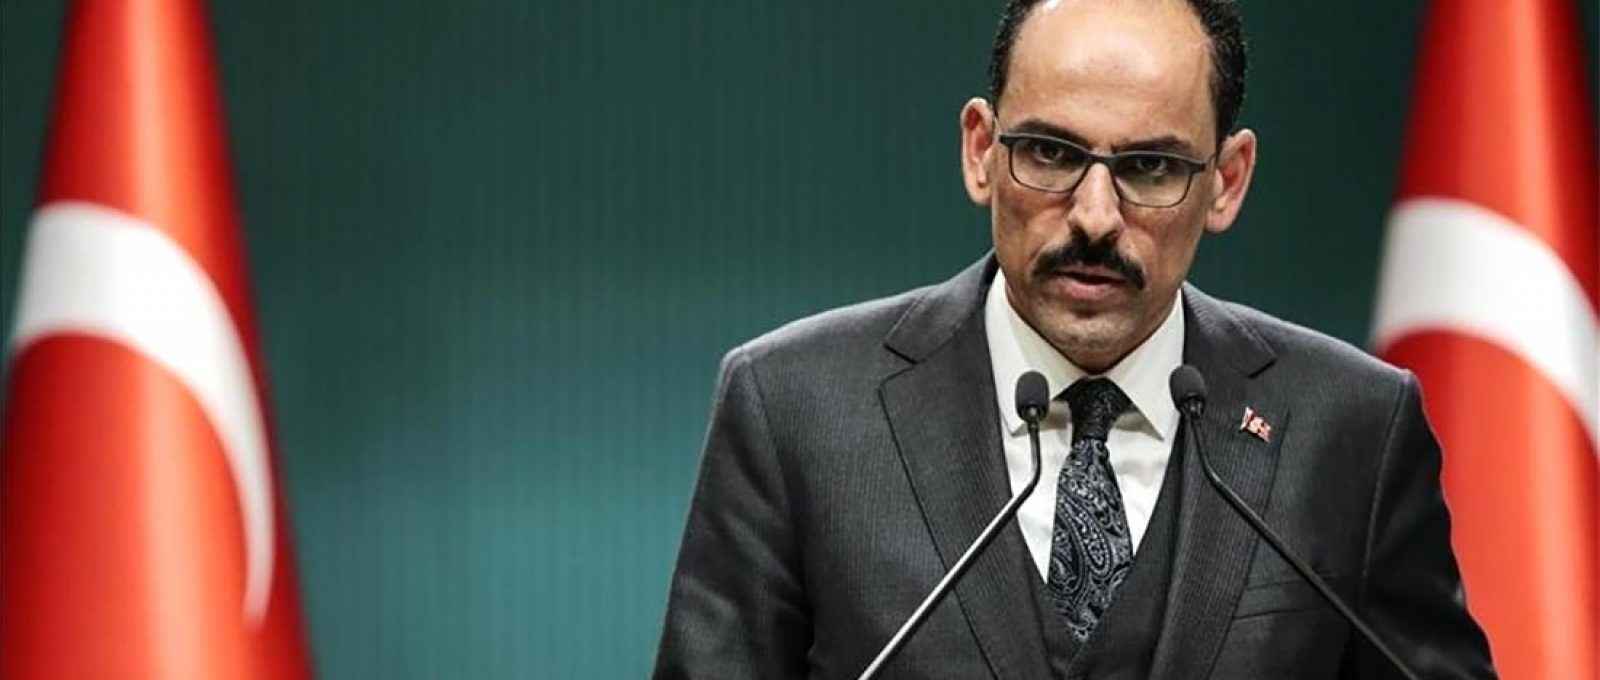 Ibrahim Kalin, o porta-voz da presidência da Turquia (Foto: Anadolu).